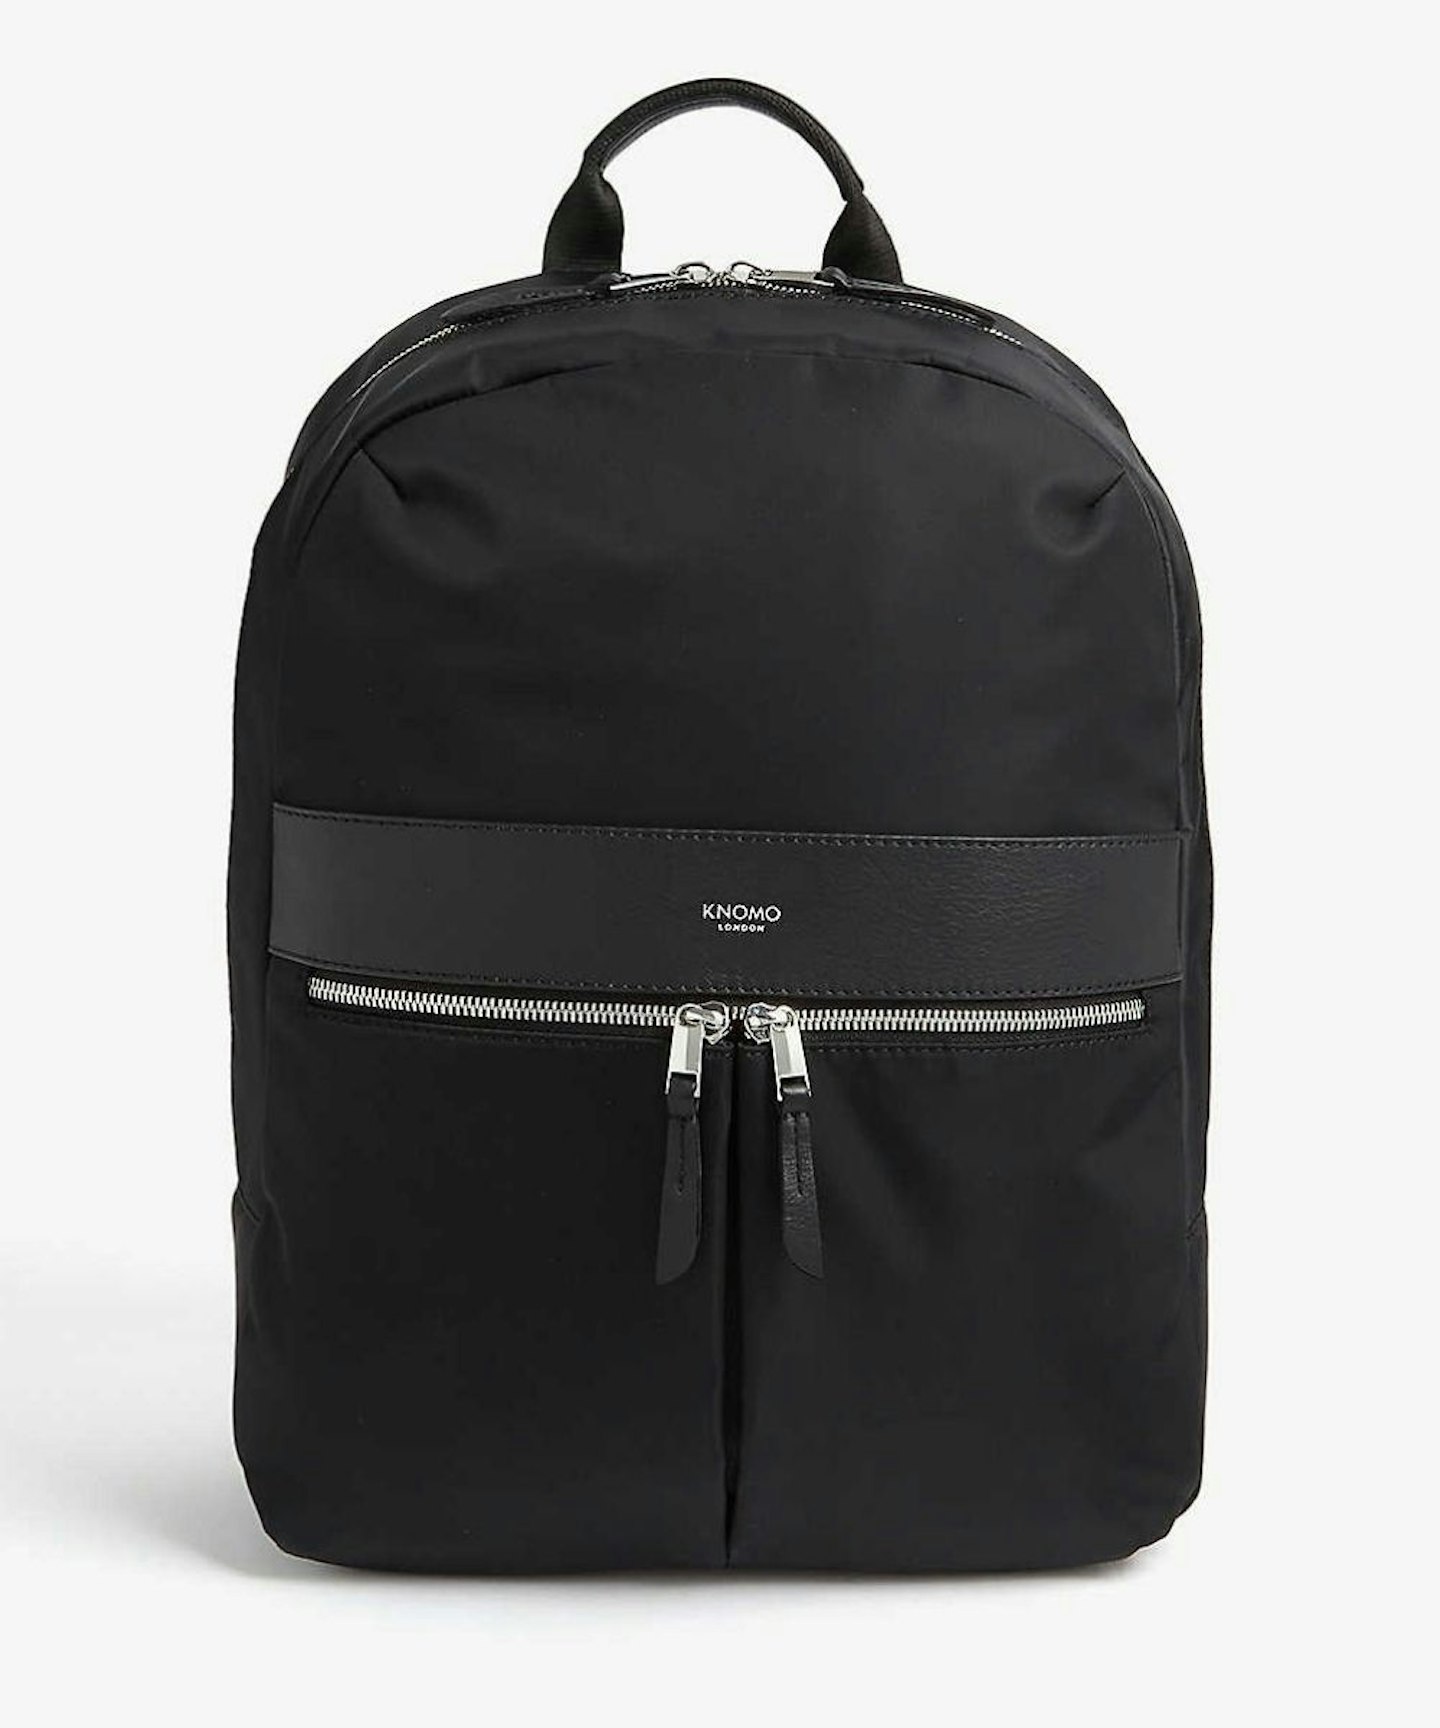 Knomo Beauchamp nylon backpack